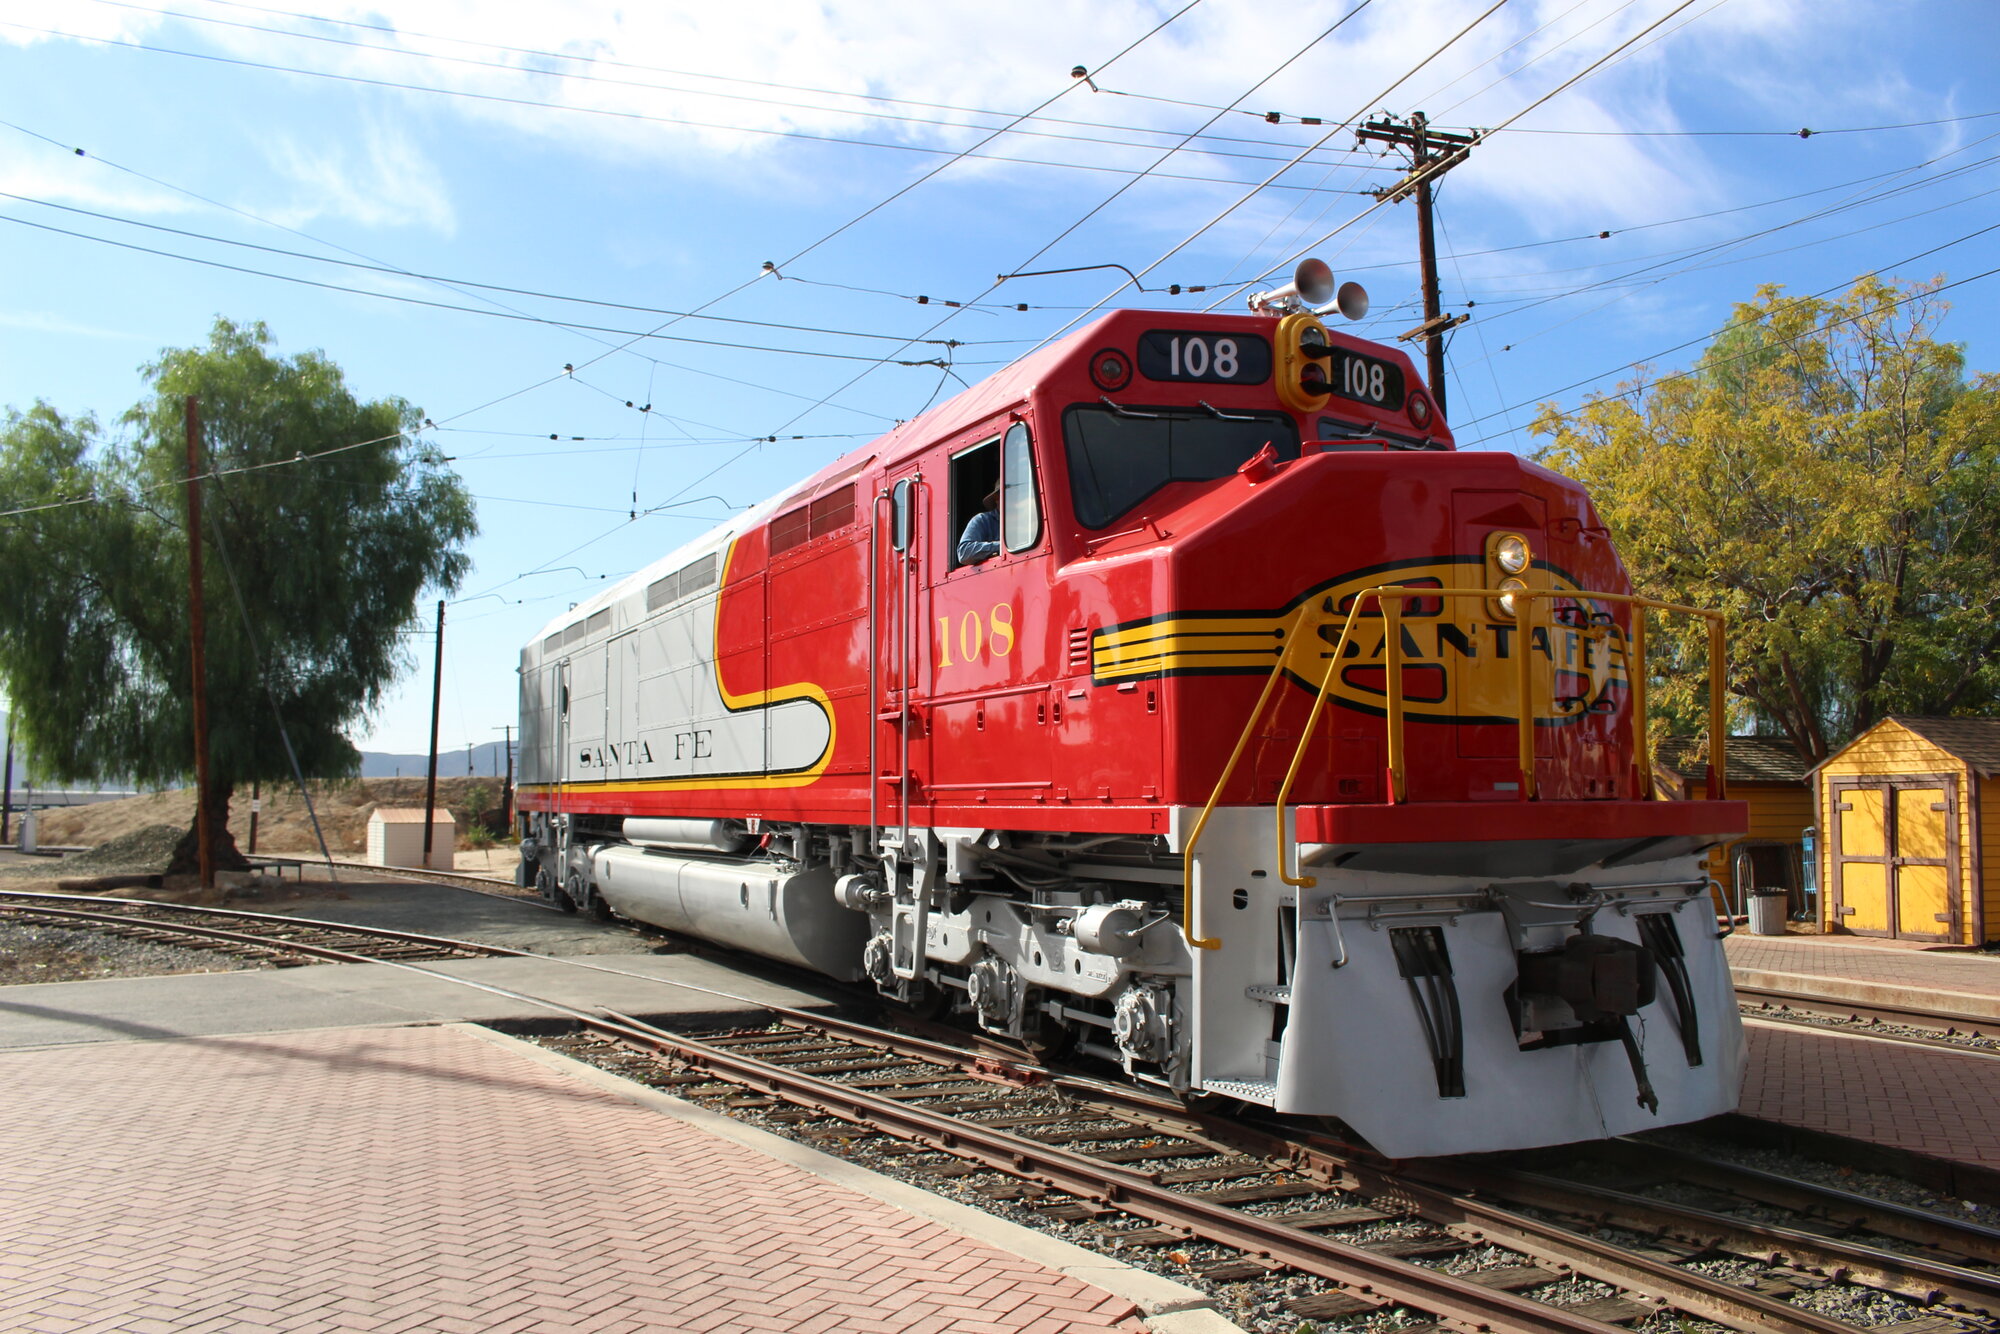 ATSF_108_at_Southern_California_Railway_Museum.jpg